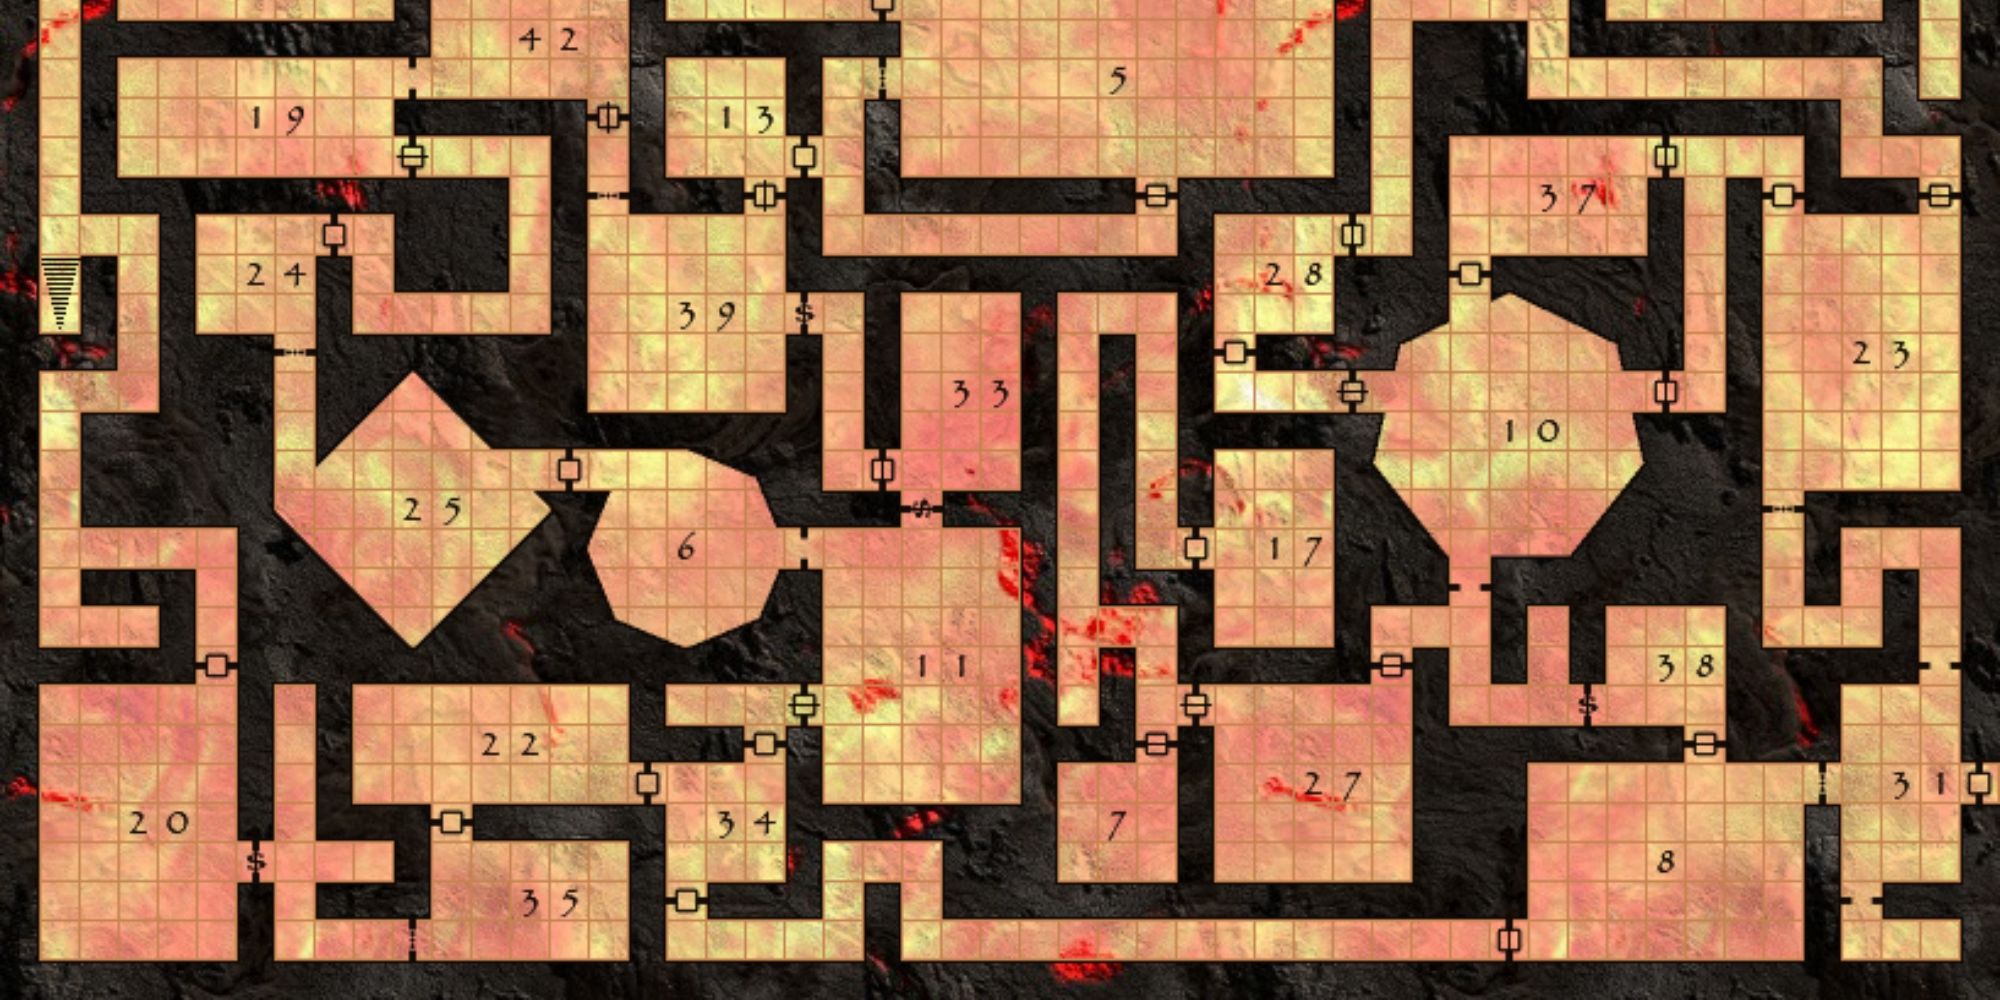 Dungeon map with black walls and orange floor